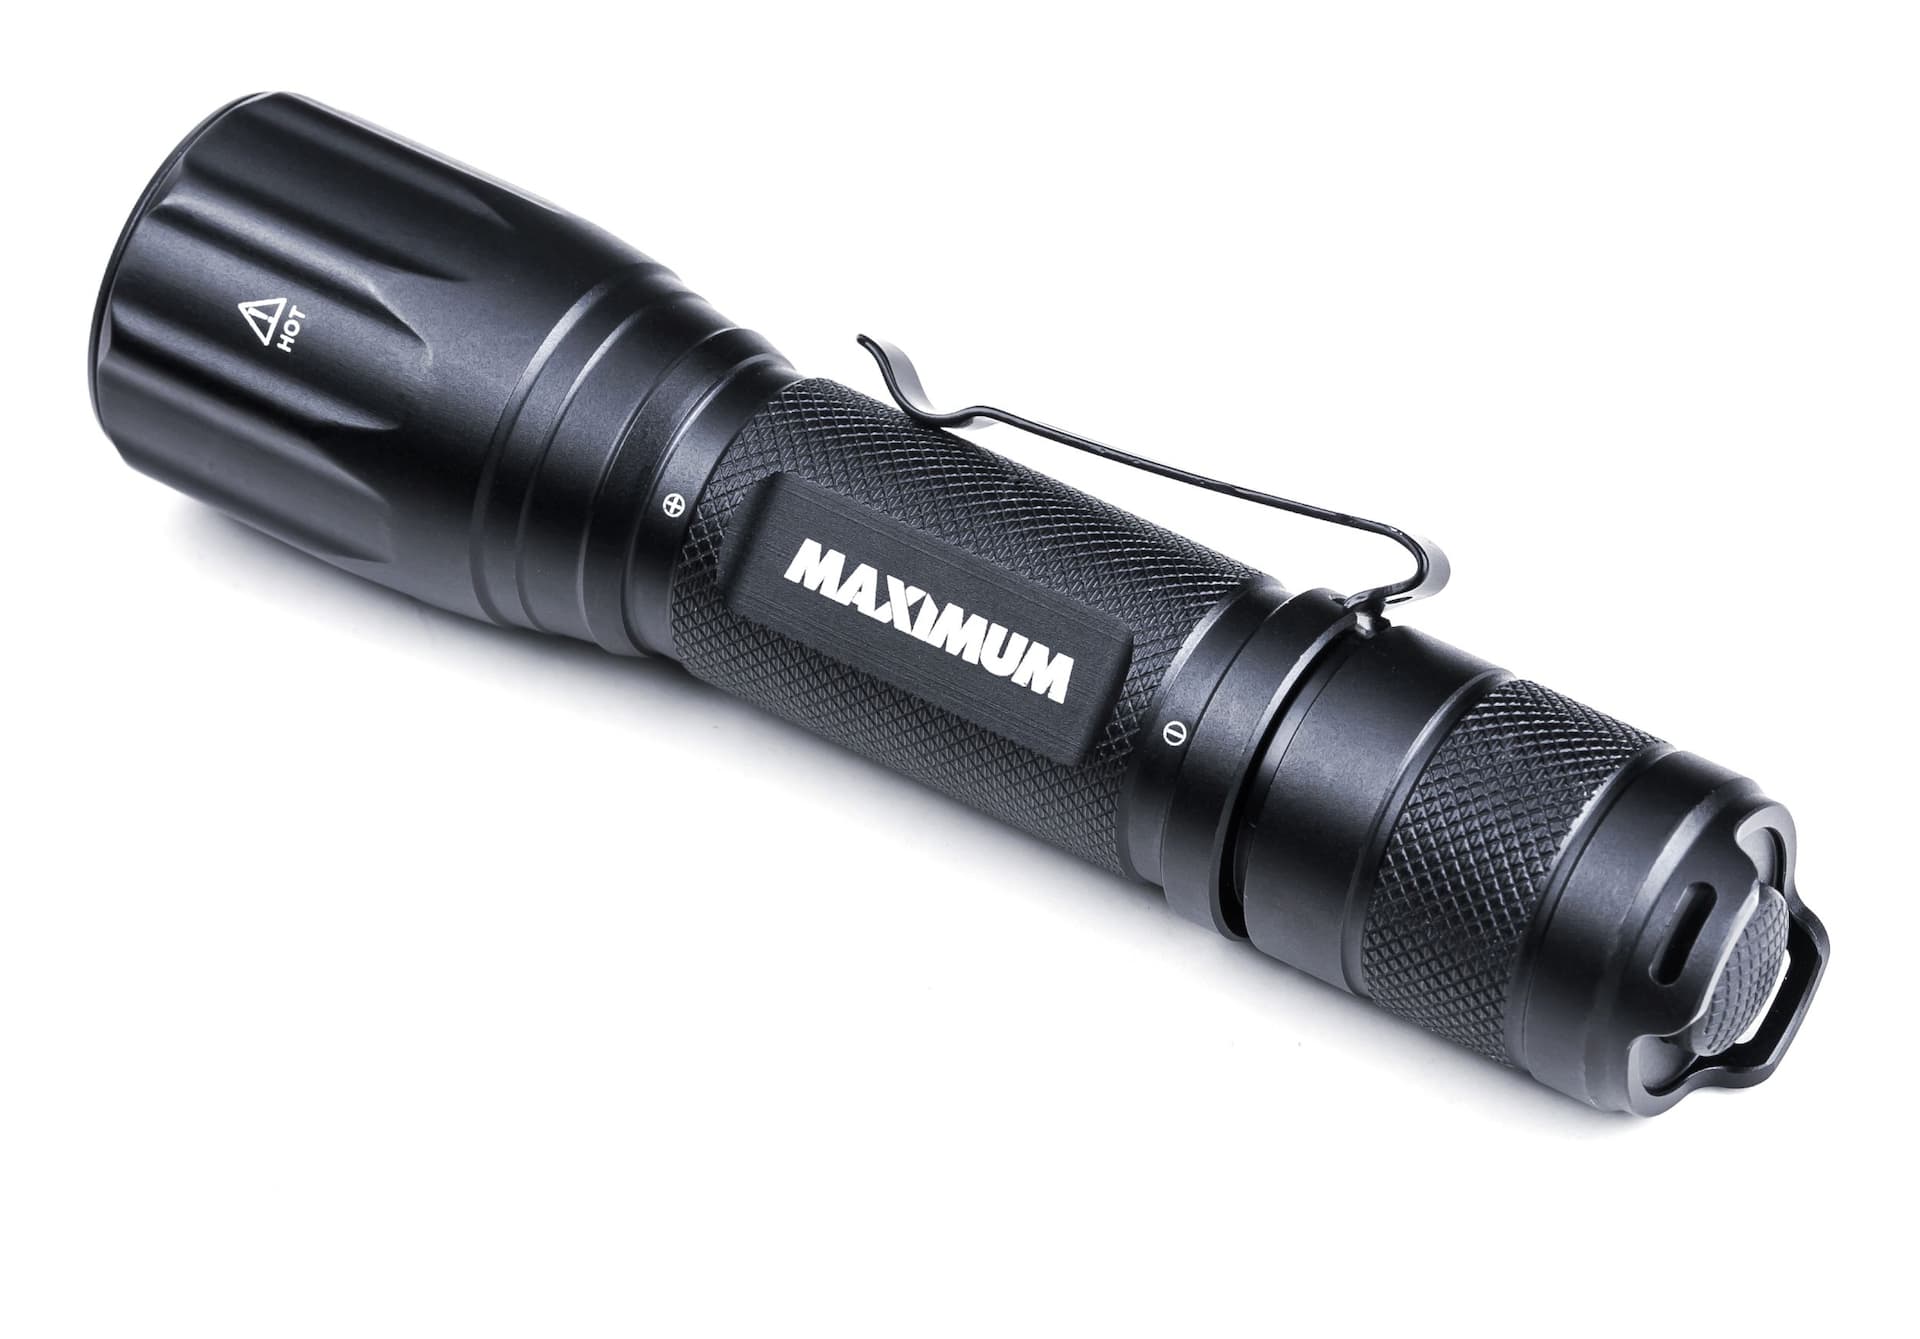 MAXIMUM 600 Lumens Waterproof Rechargeable LED Handheld Flashlight